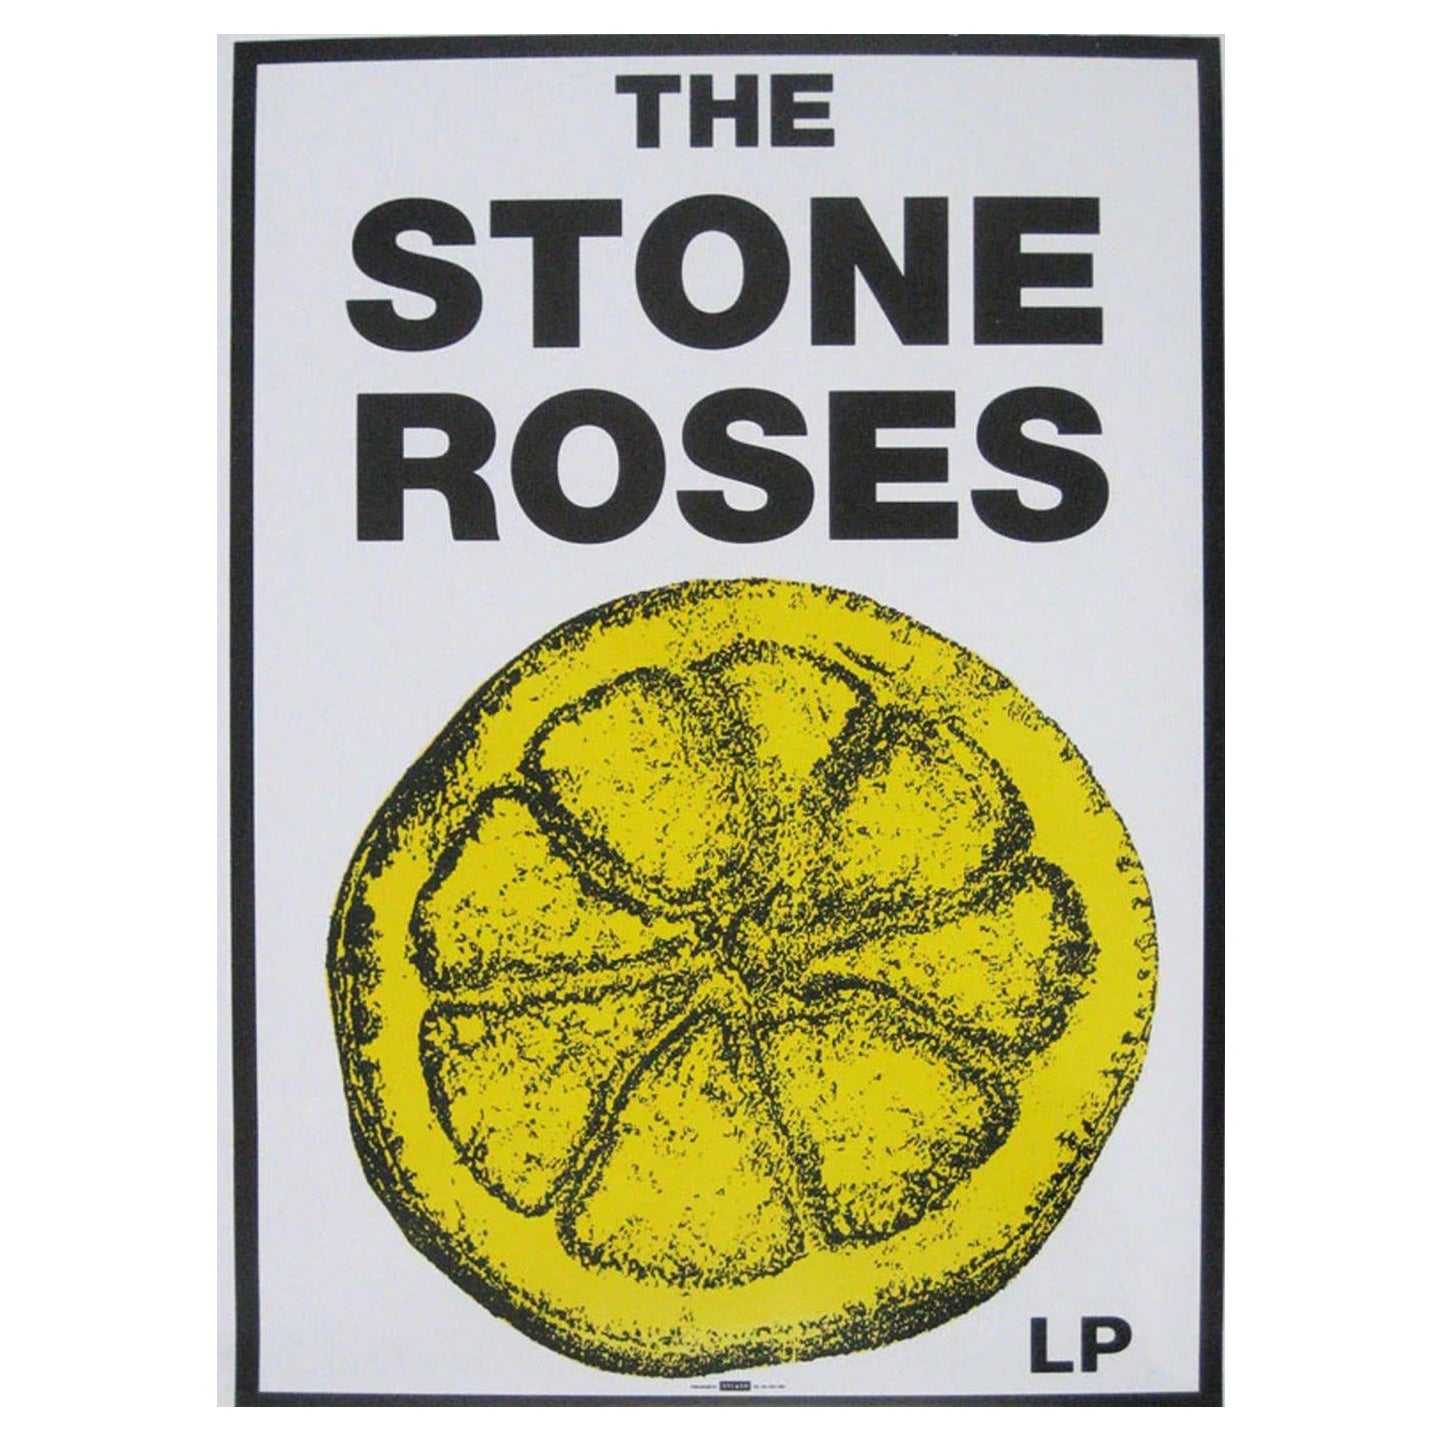 1989 The Stone Roses LP Original Vintage Poster For Sale